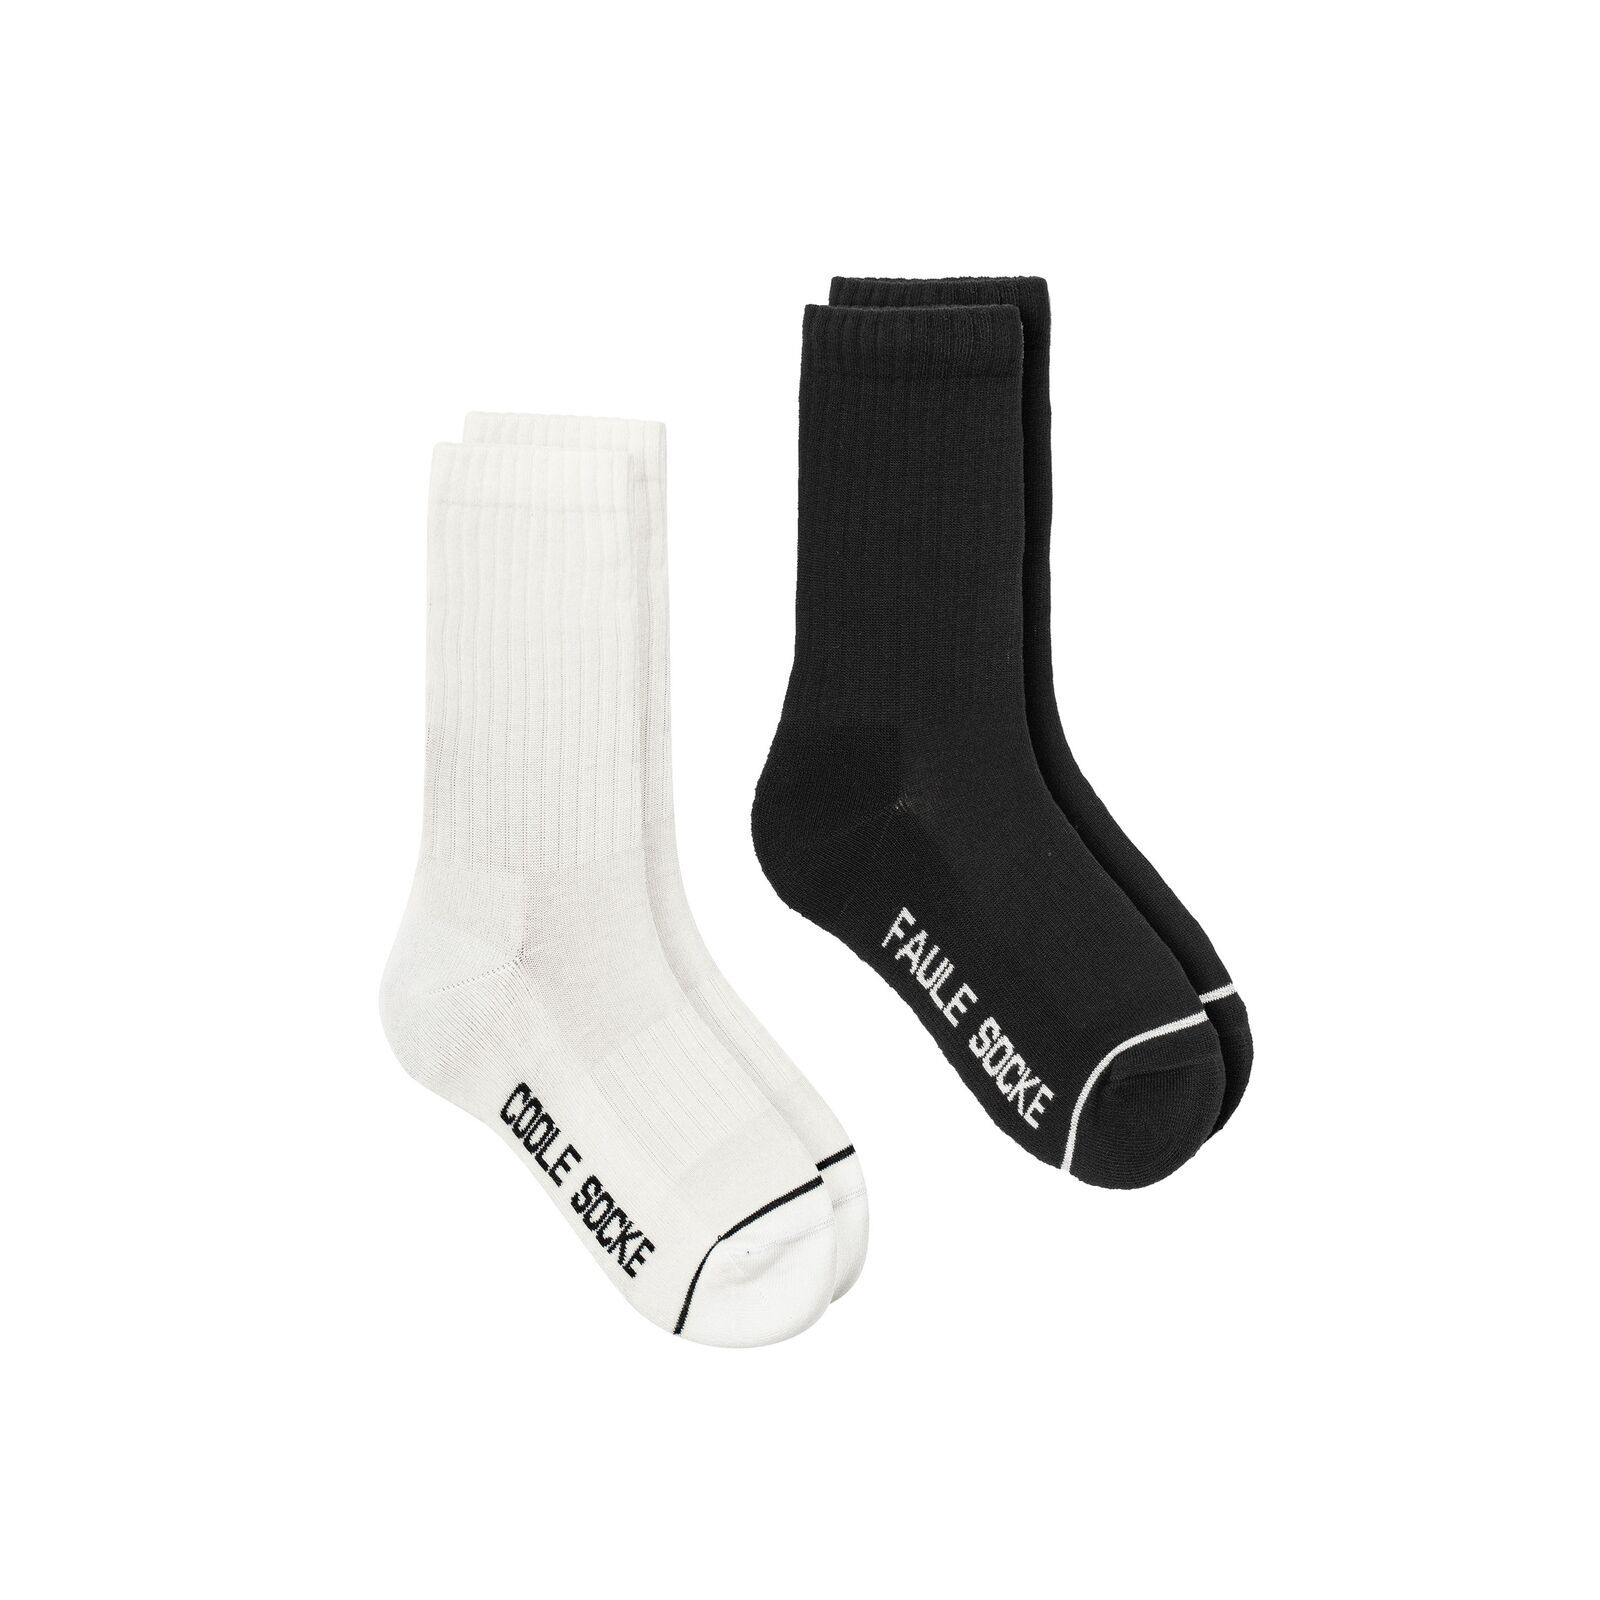 recolution Socken Set #COOLE & FAULE SOCKE black / white 35-38